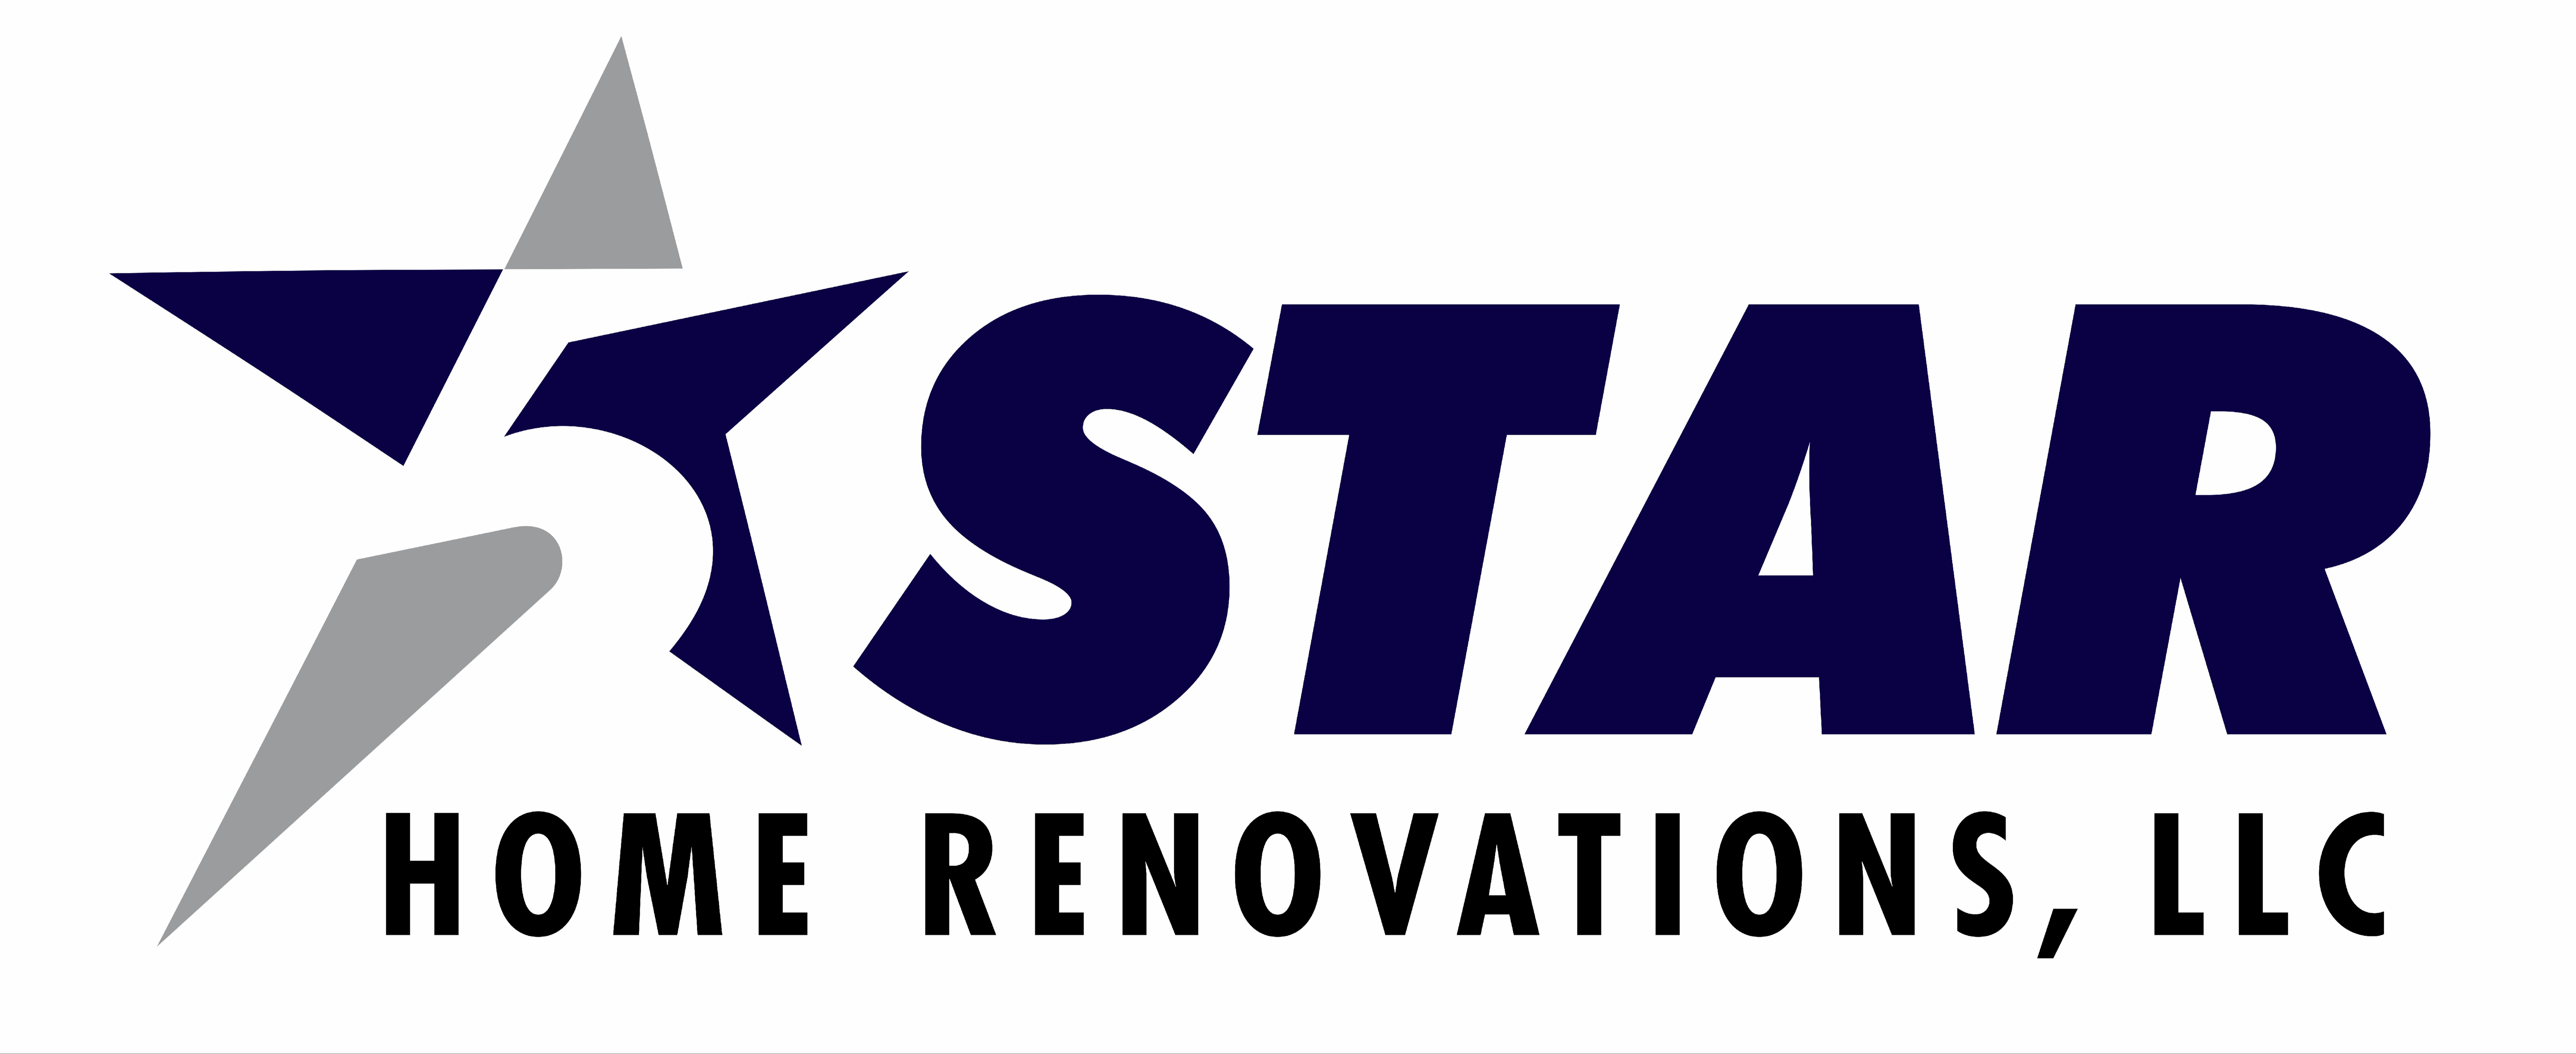 5 Star Home Renovations, LLC Logo